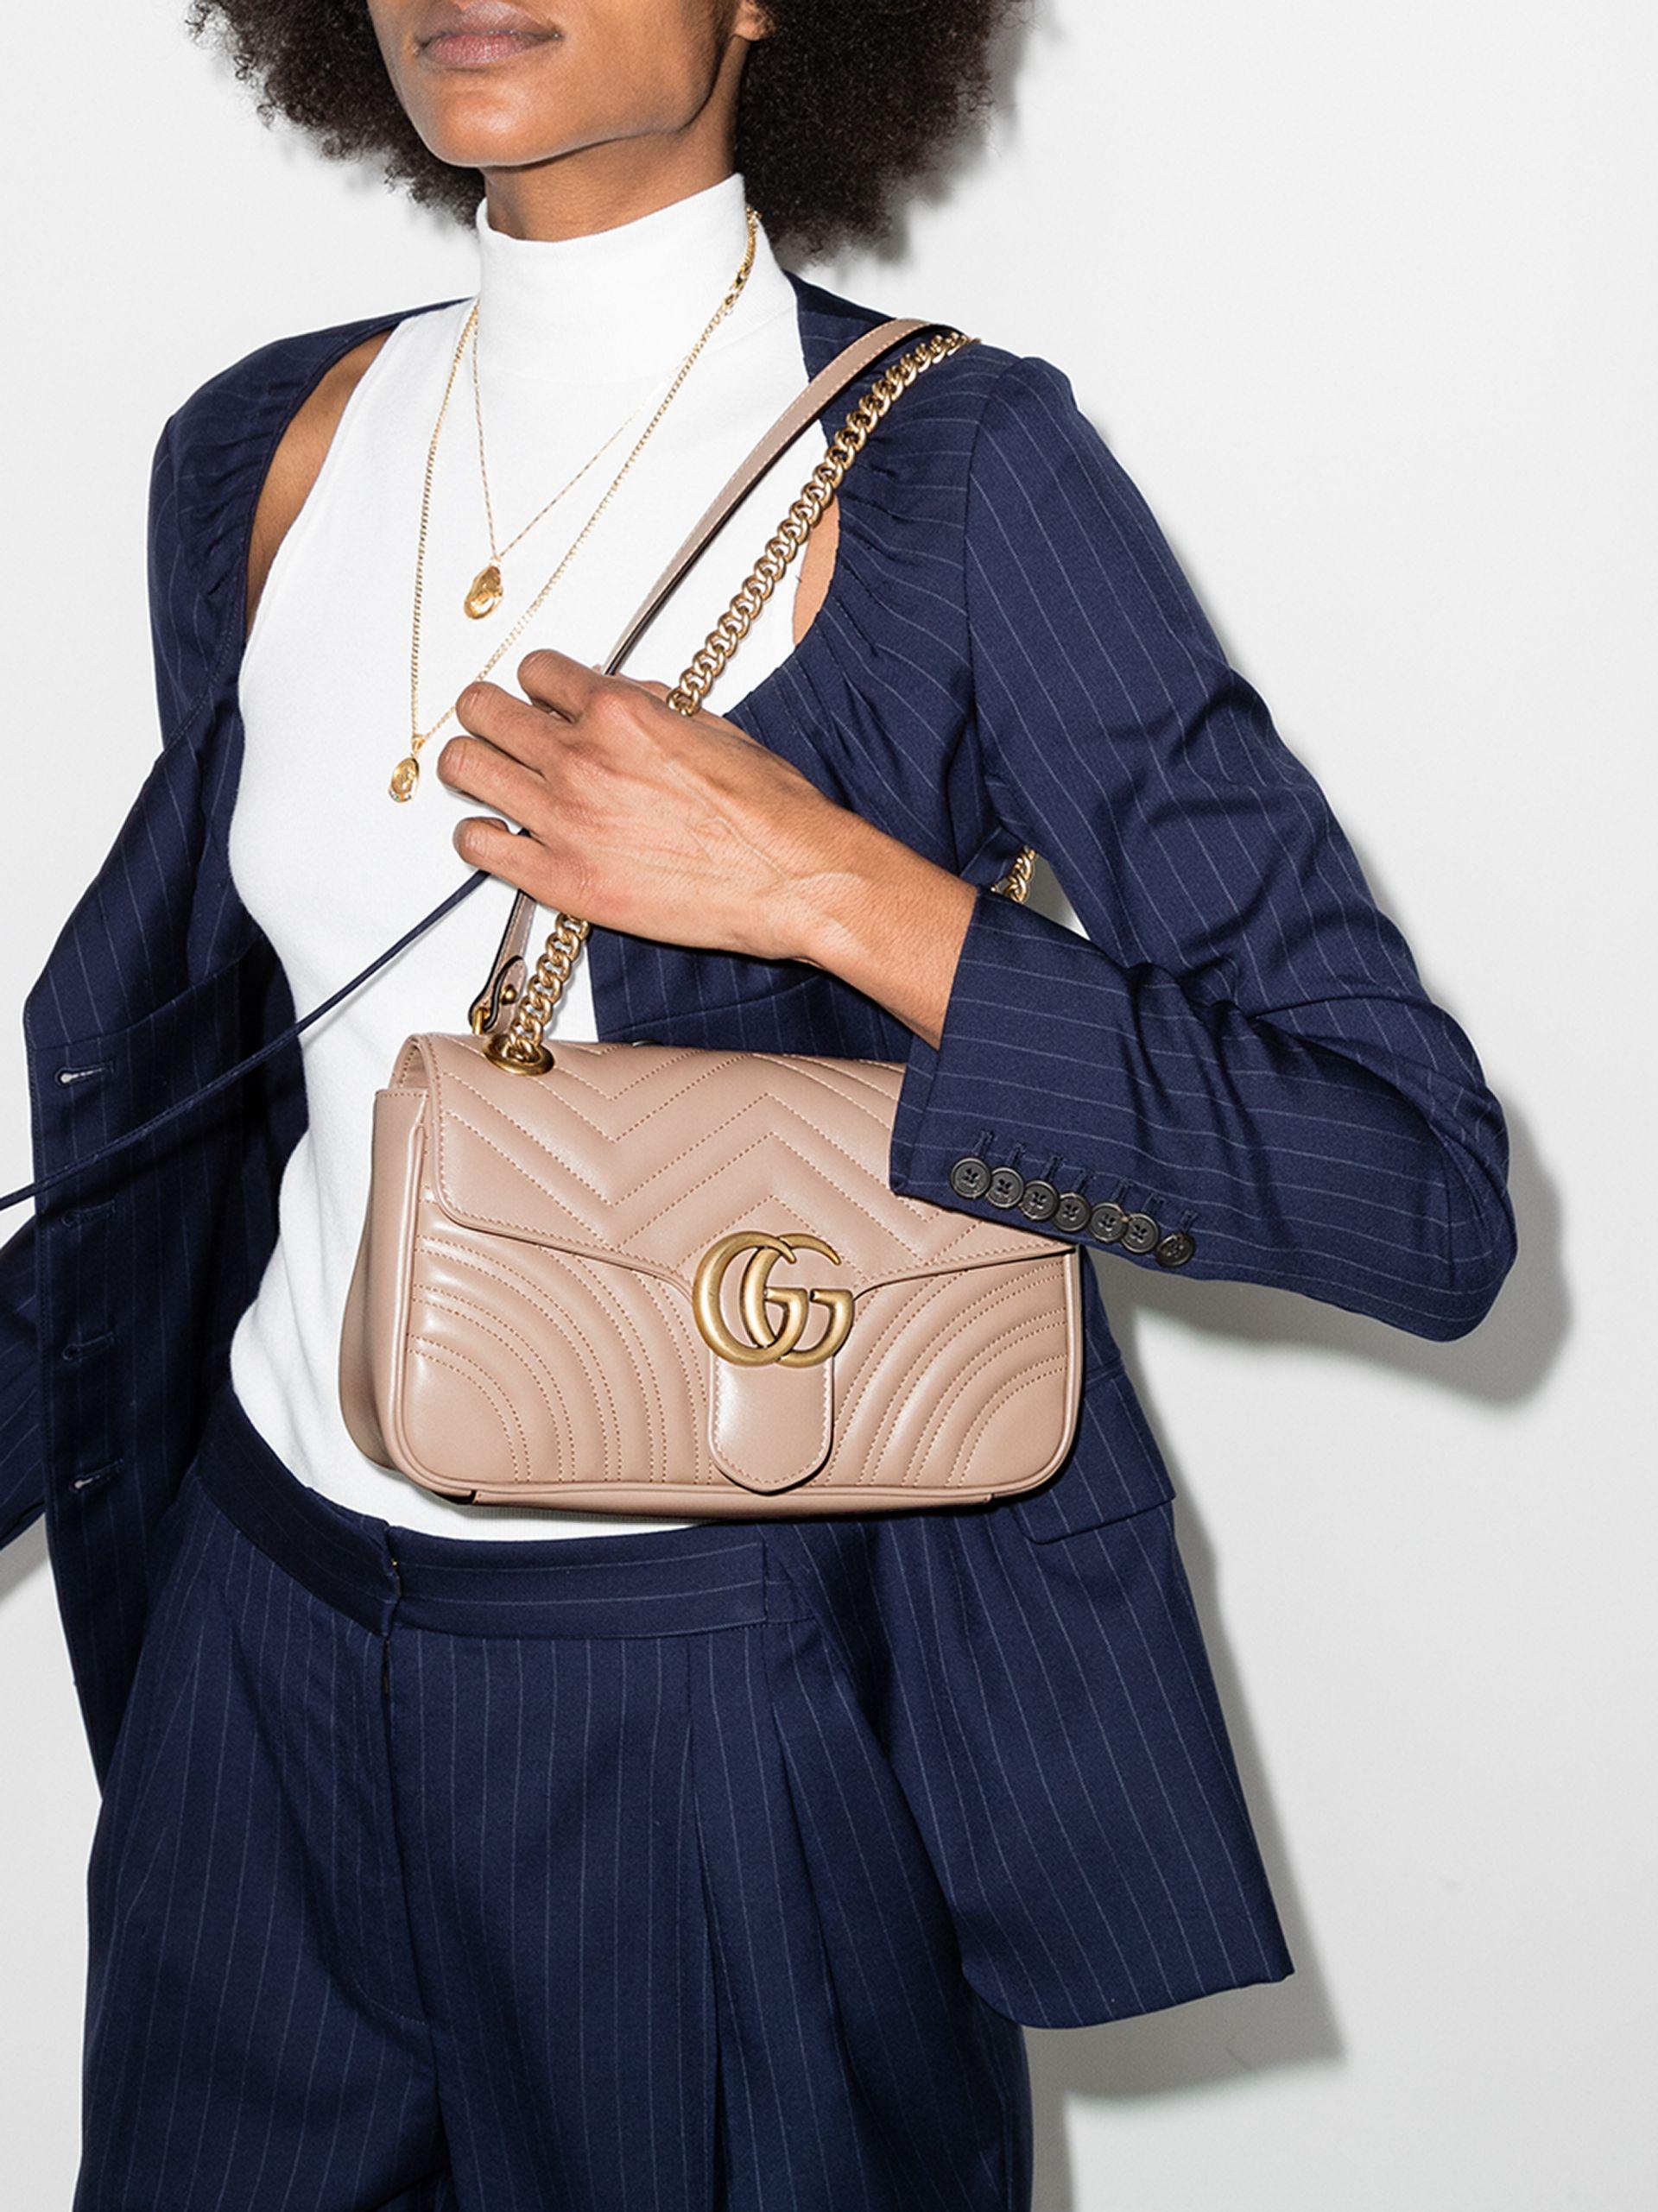 Gucci GG Marmont Shoulder Bag Matelasse Medium Dusty Pink